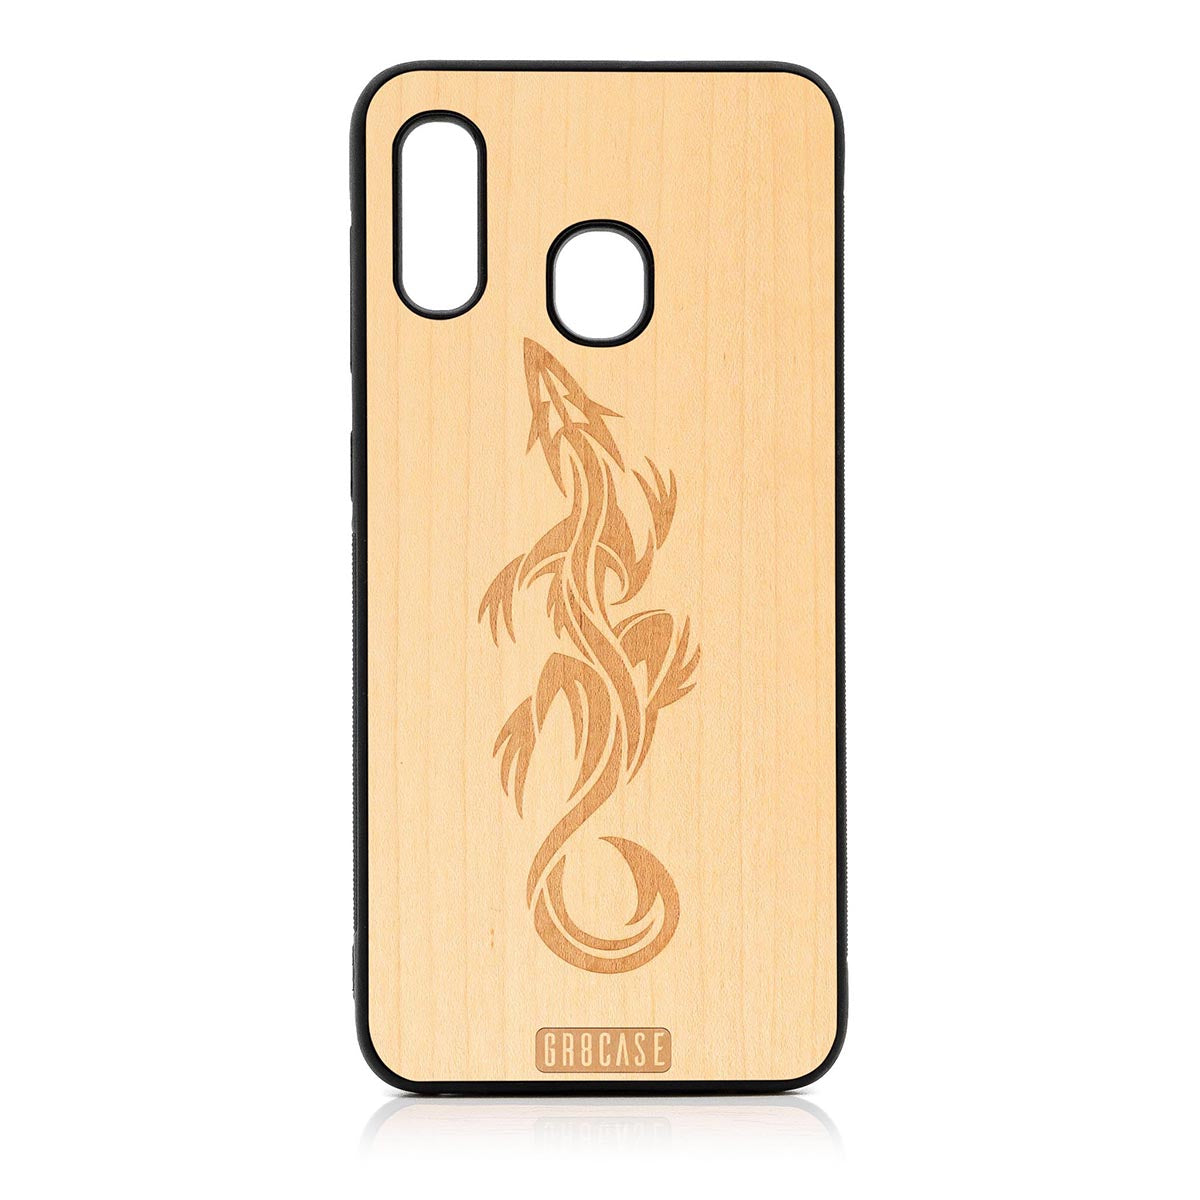 Lizard Design Wood Case For Samsung Galaxy A20 by GR8CASE